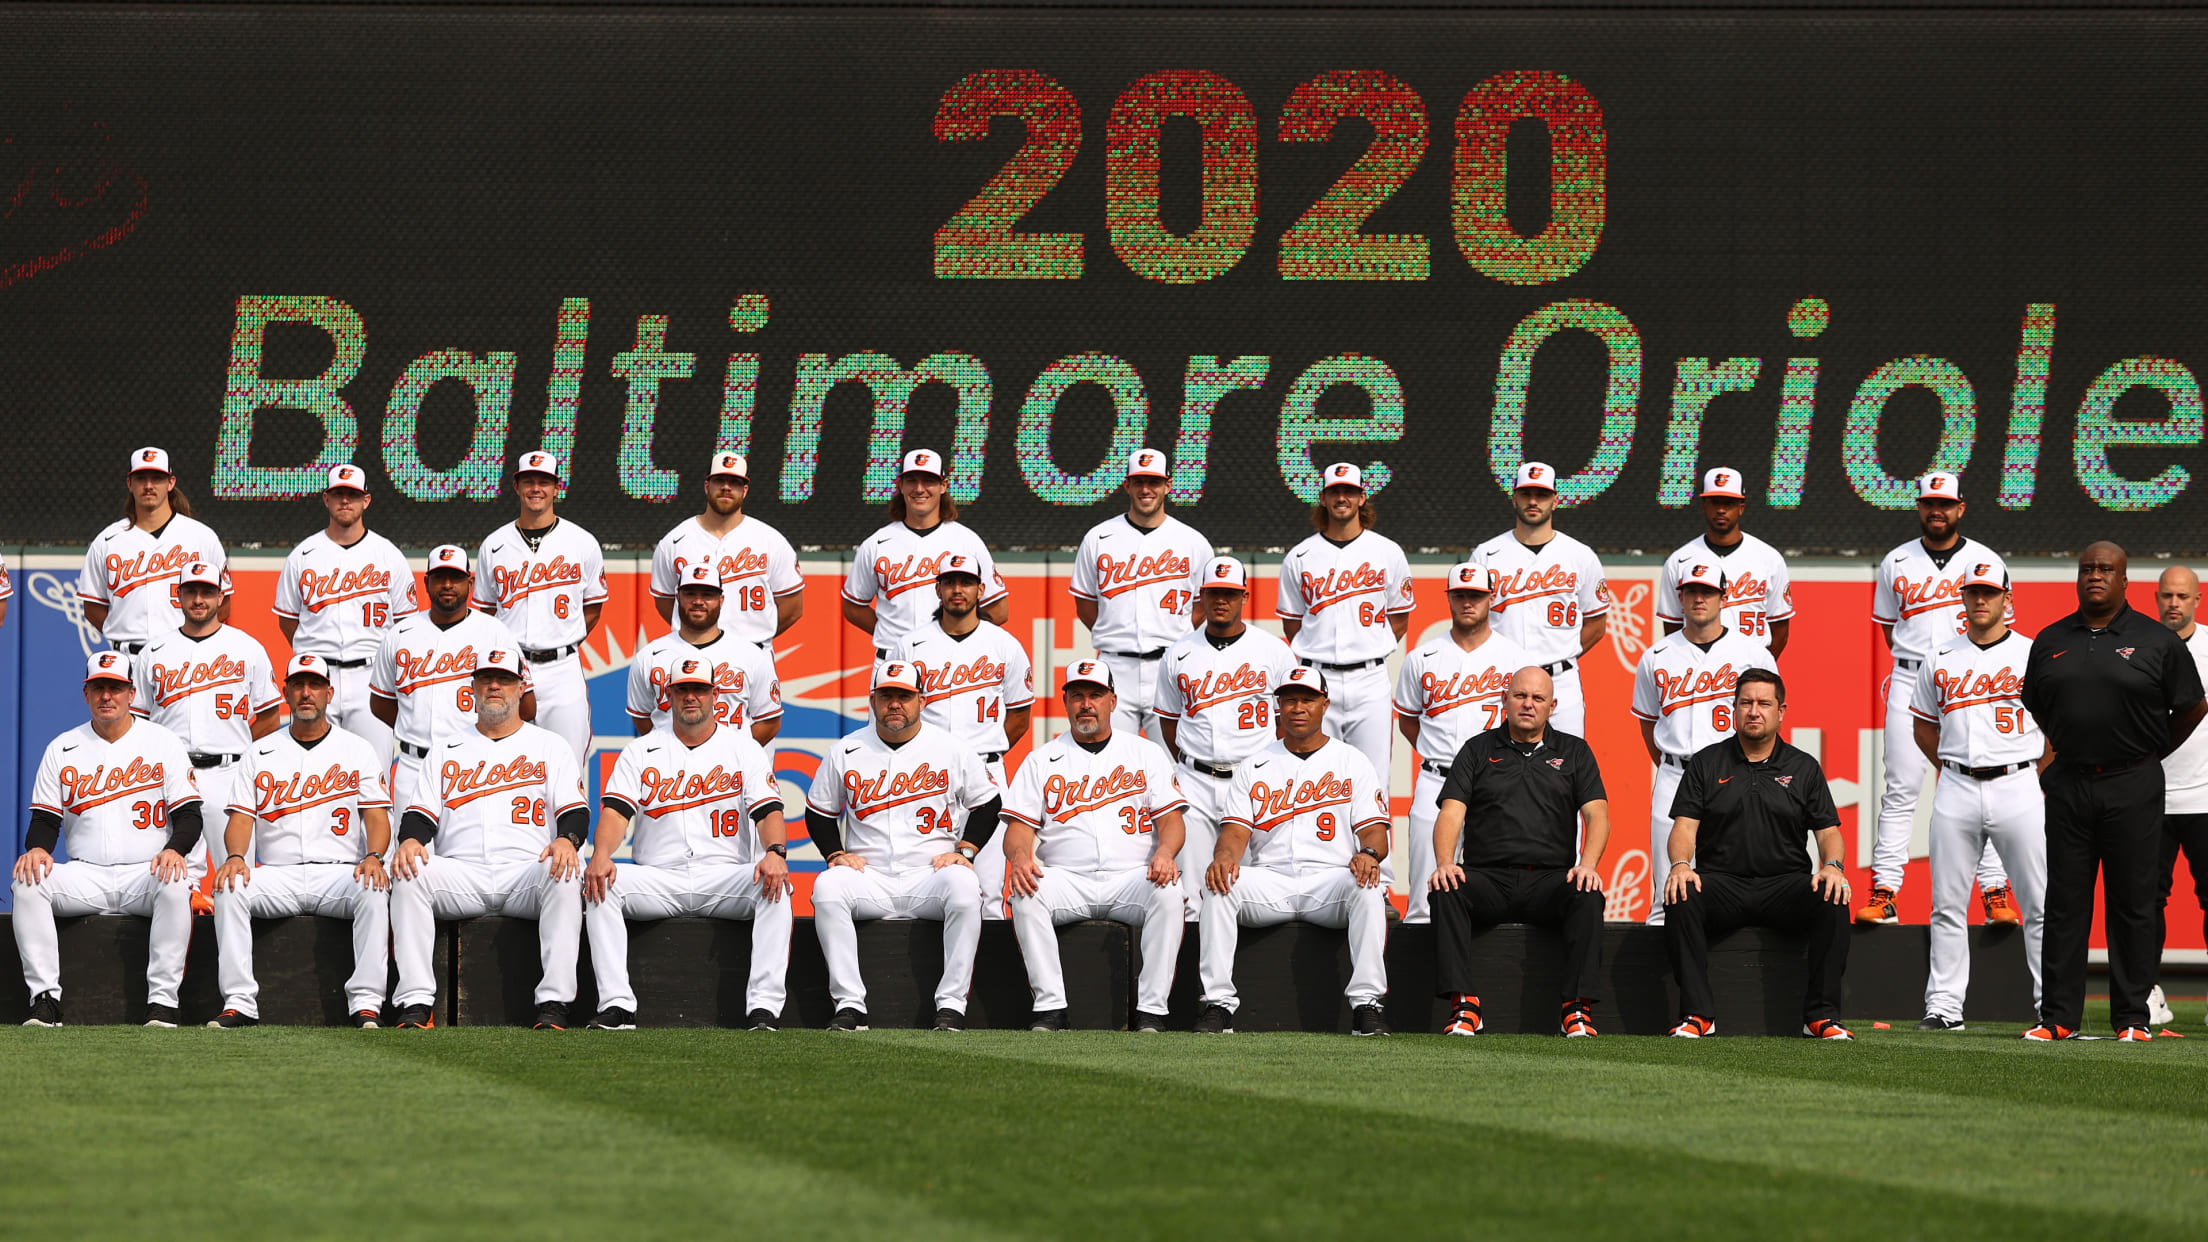 Orioles 2020 team photo